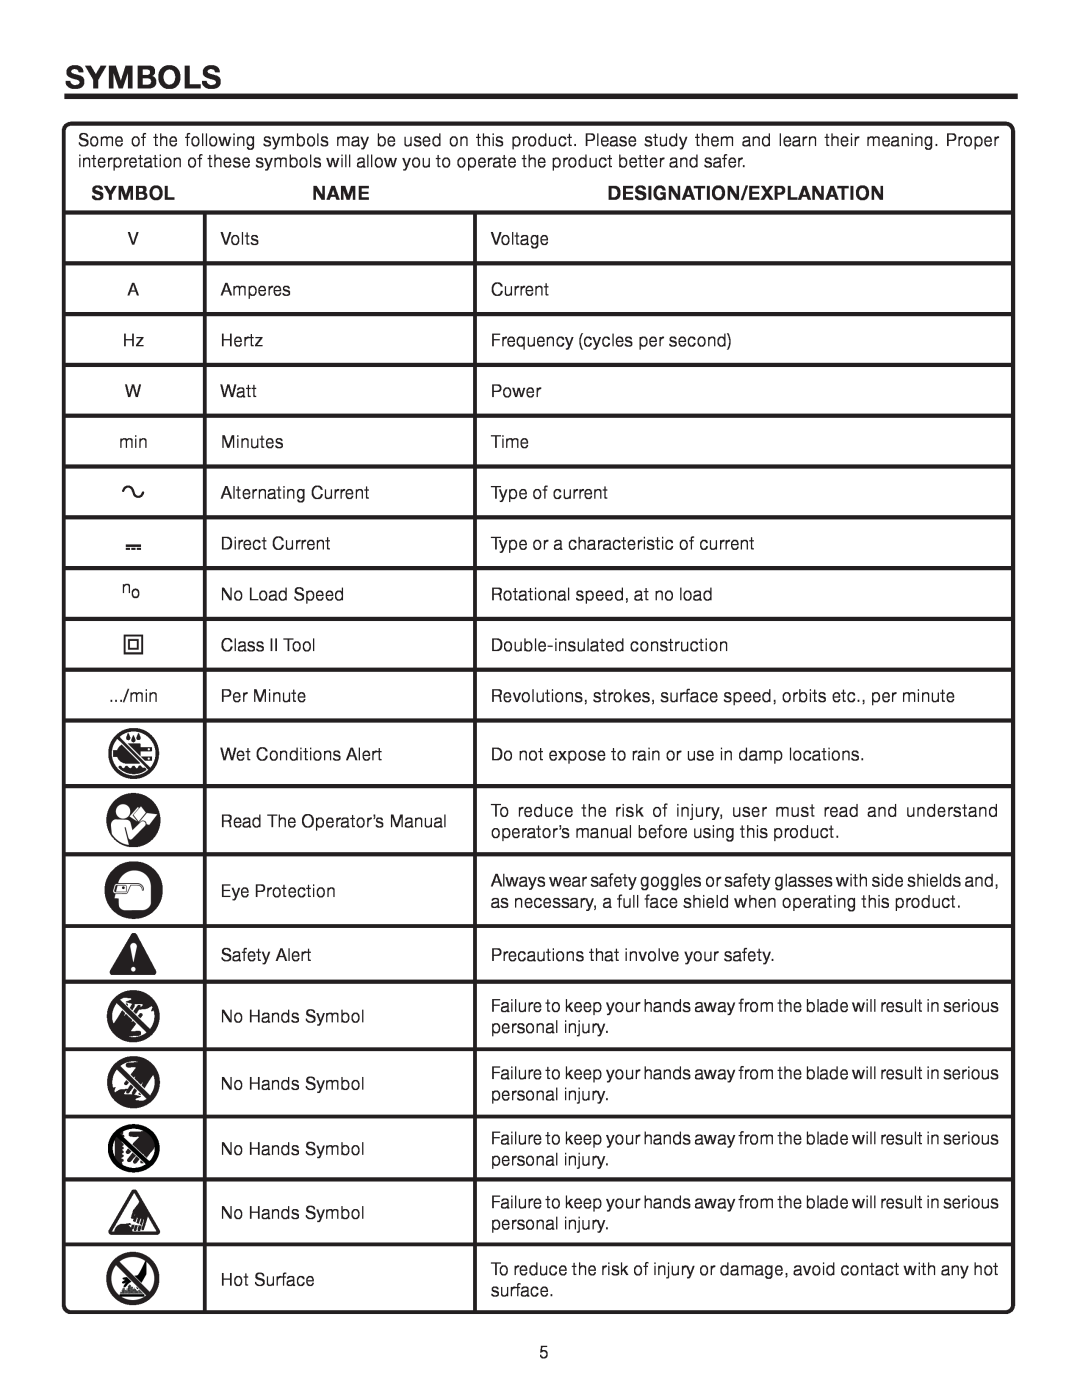 RIDGID R5013 manual Symbols, Name, Designation/Explanation 